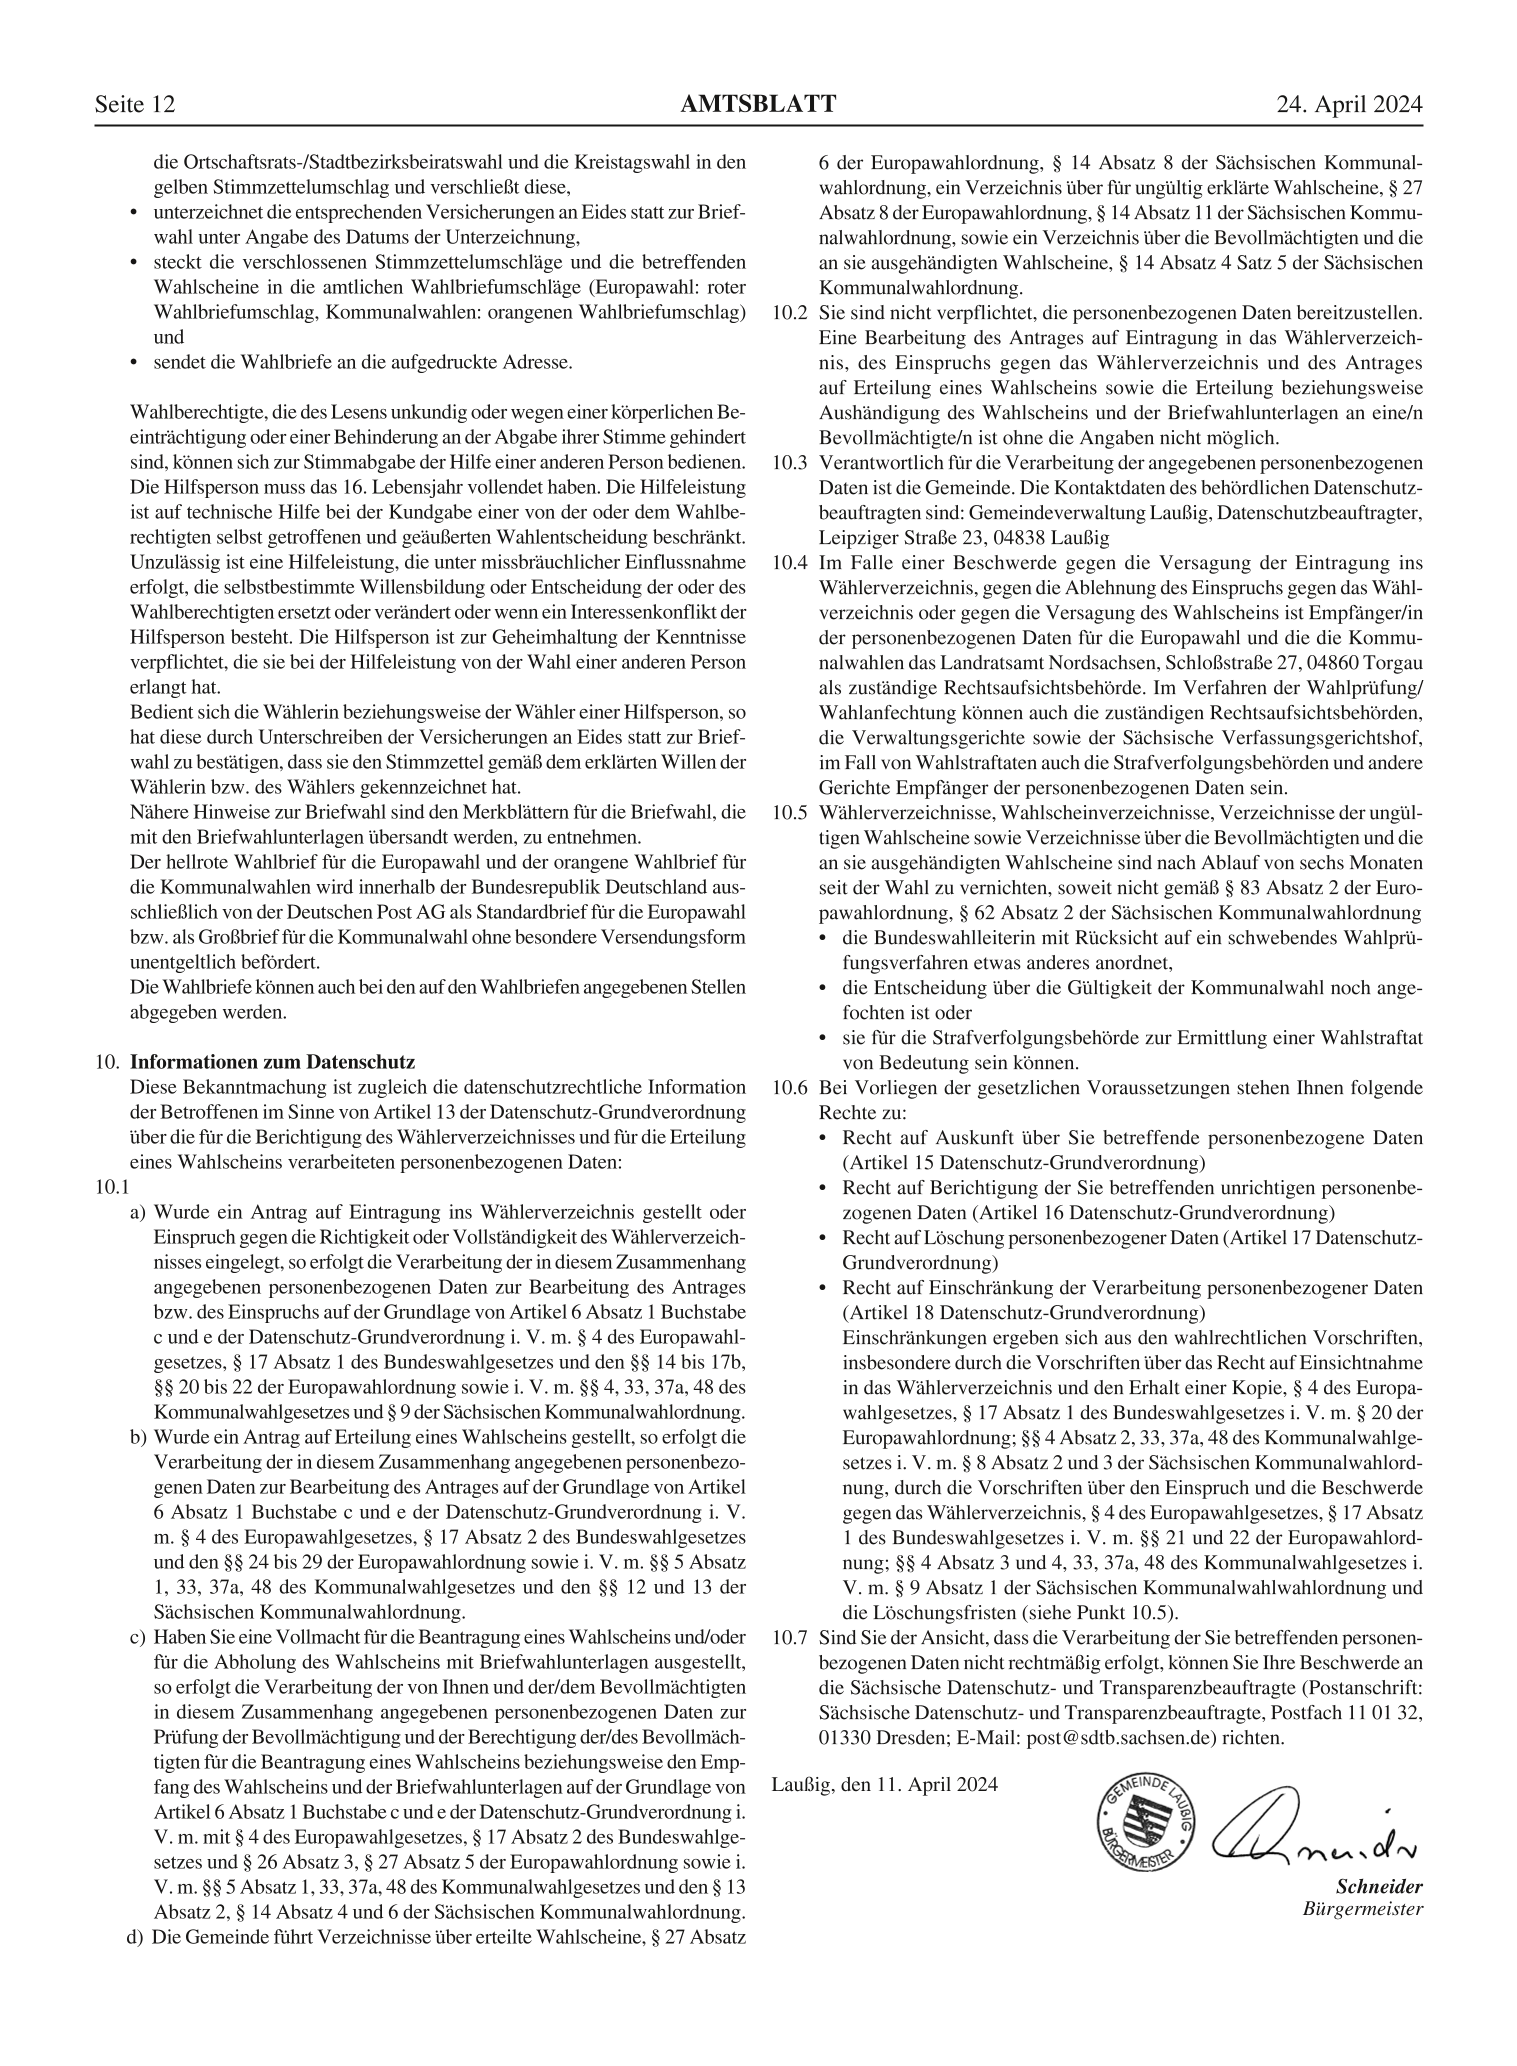 Amtsblatt Nr. 05/2024 vom 24.04.2024 Seite 4